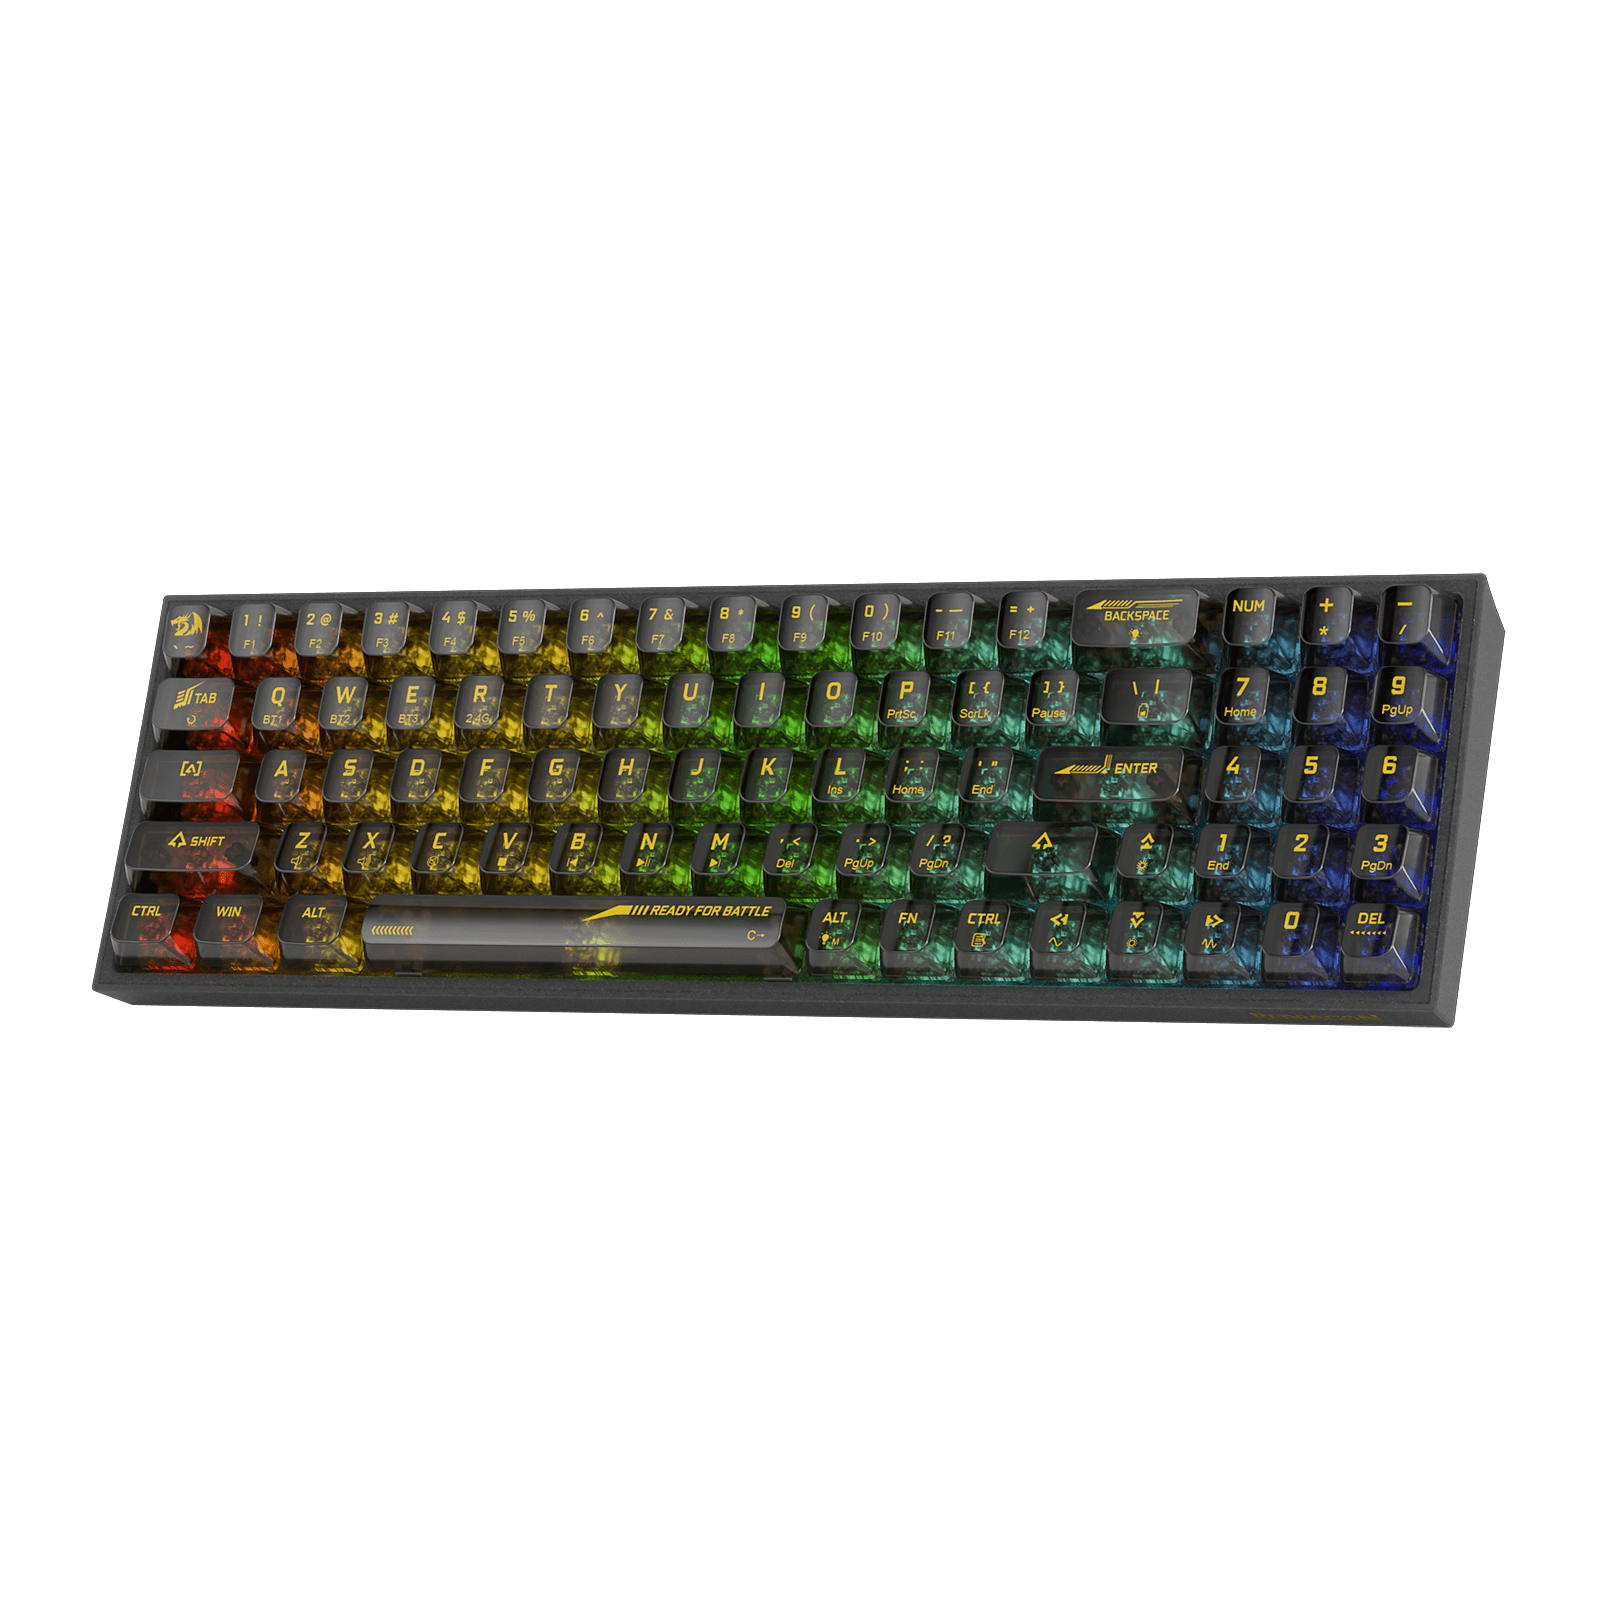 POLLUX K628 PRO SE 75% Full-Transparent Keyboard